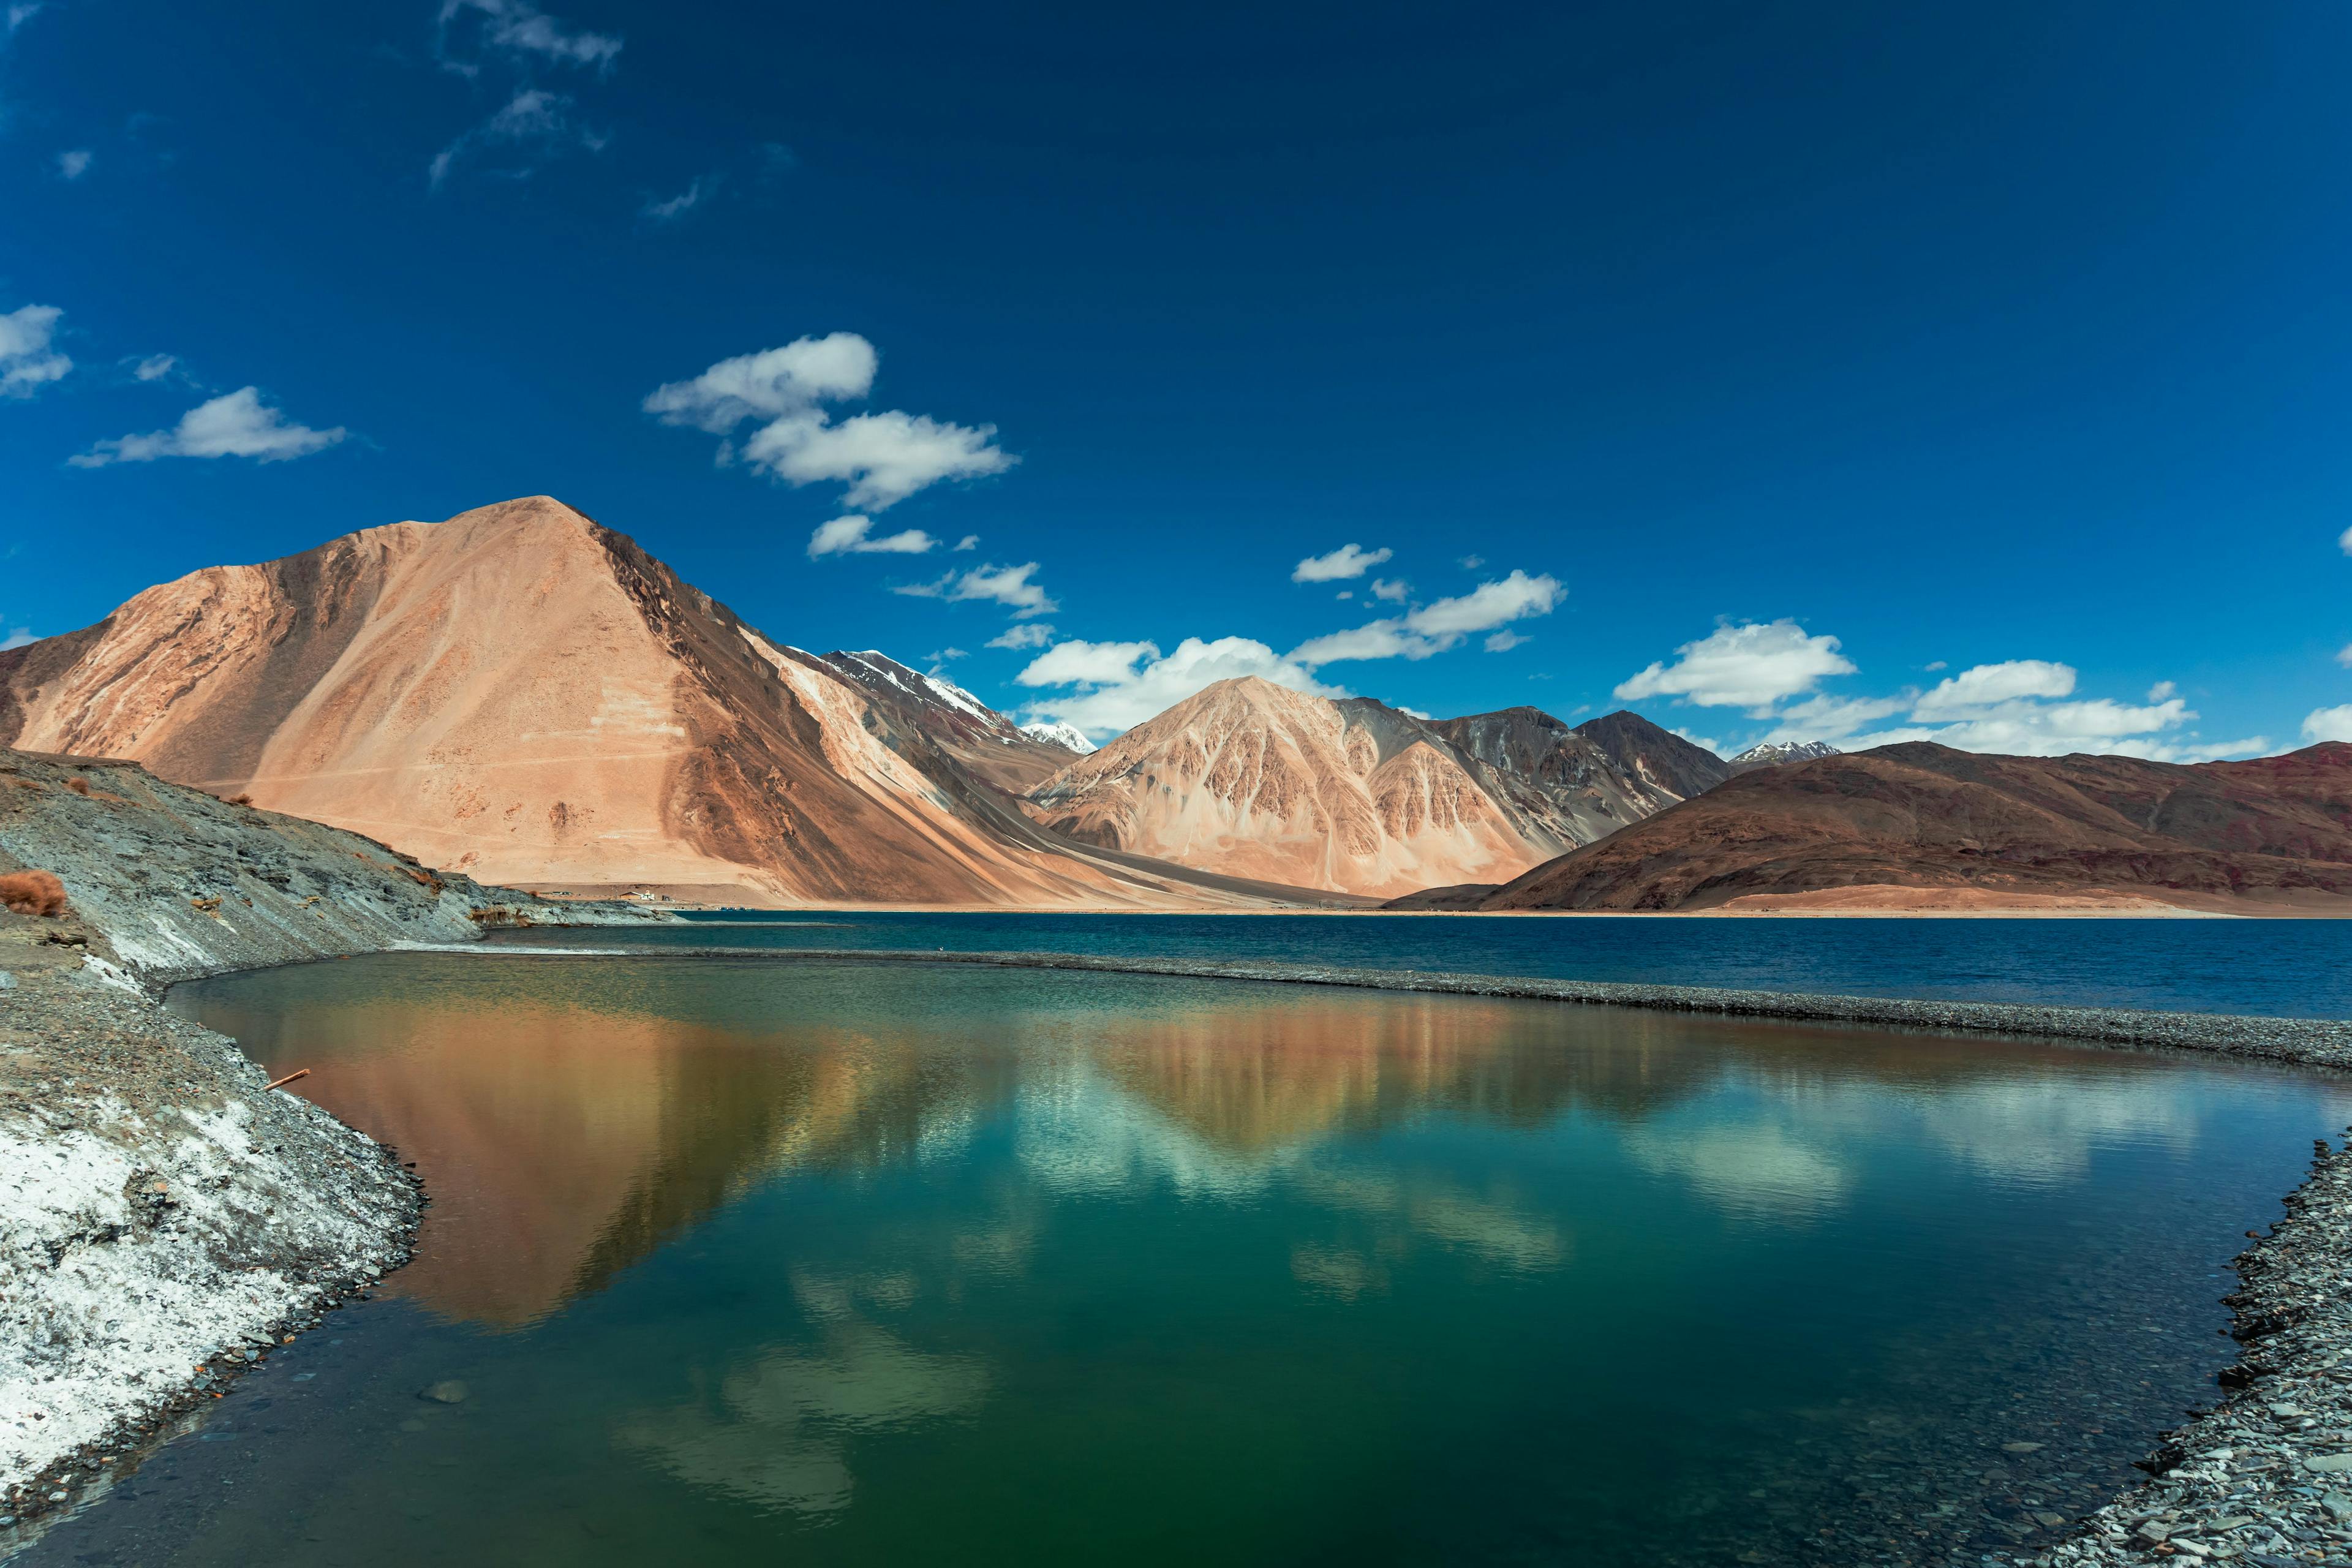 Mountain region of Ladakh India